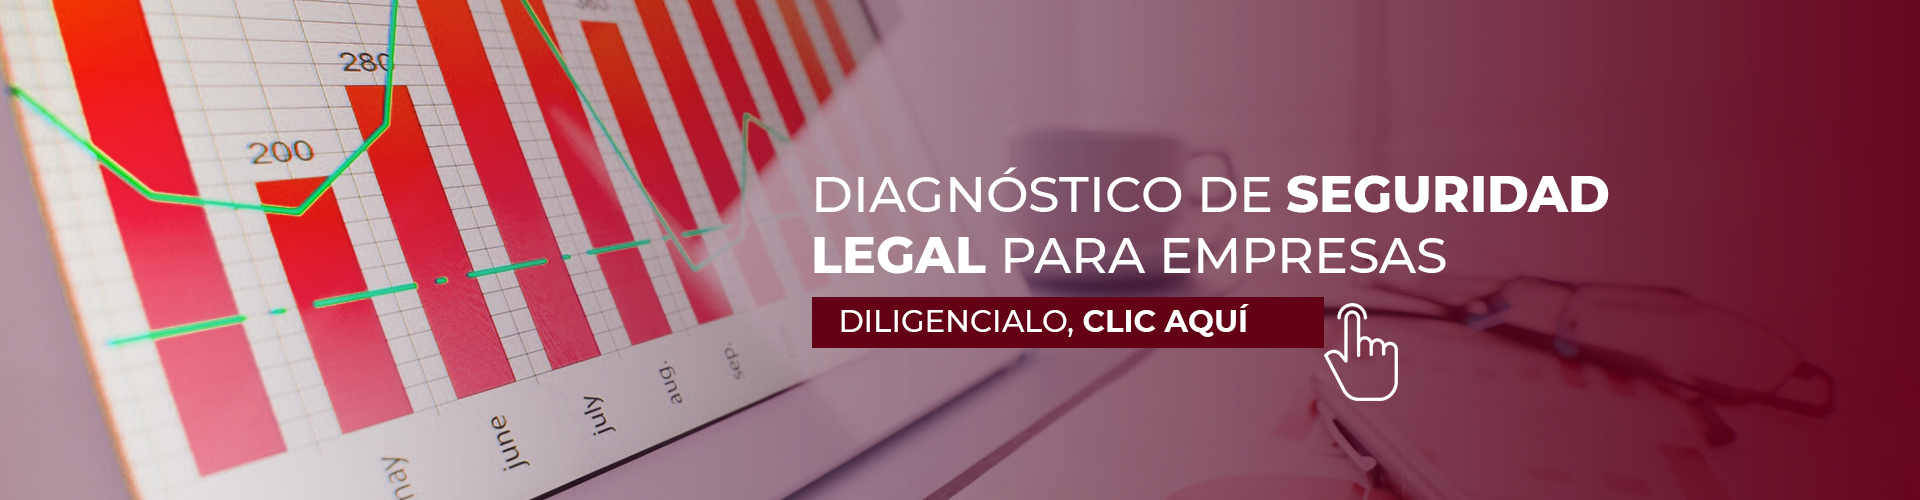 DIAGNÓSTICO DE SEGURIDAD LEGAL PARA EMPRESAS